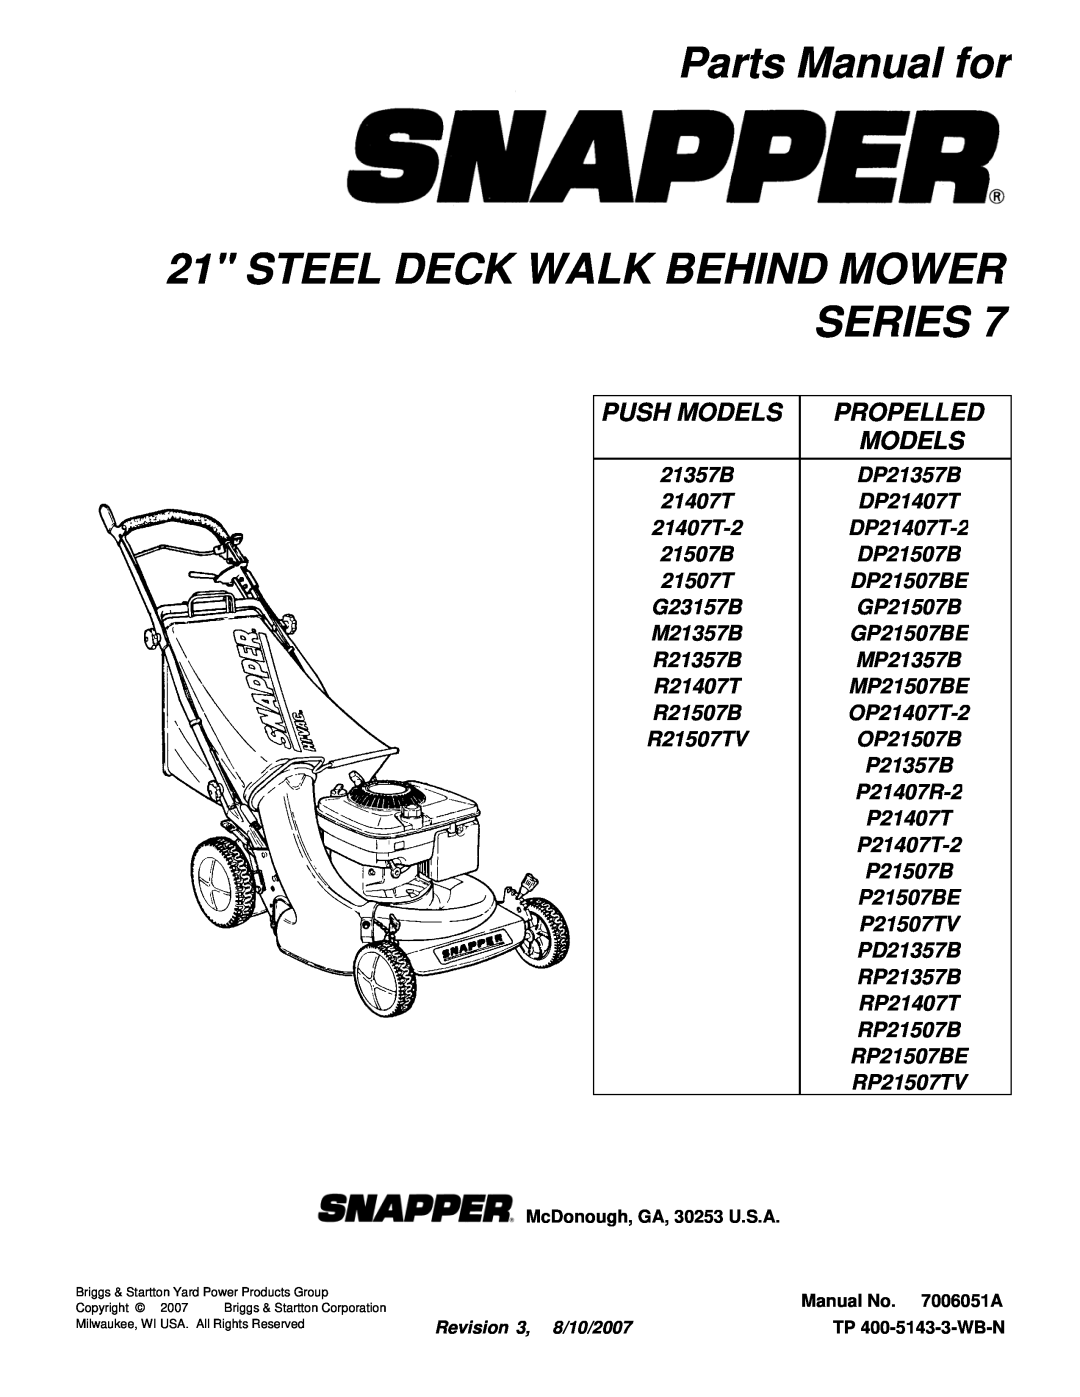 Snapper R21407T, R21507B manual Parts Manual for 21 STEEL DECK WALK BEHIND MOWER SERIES, Push Models, Propelled Models 